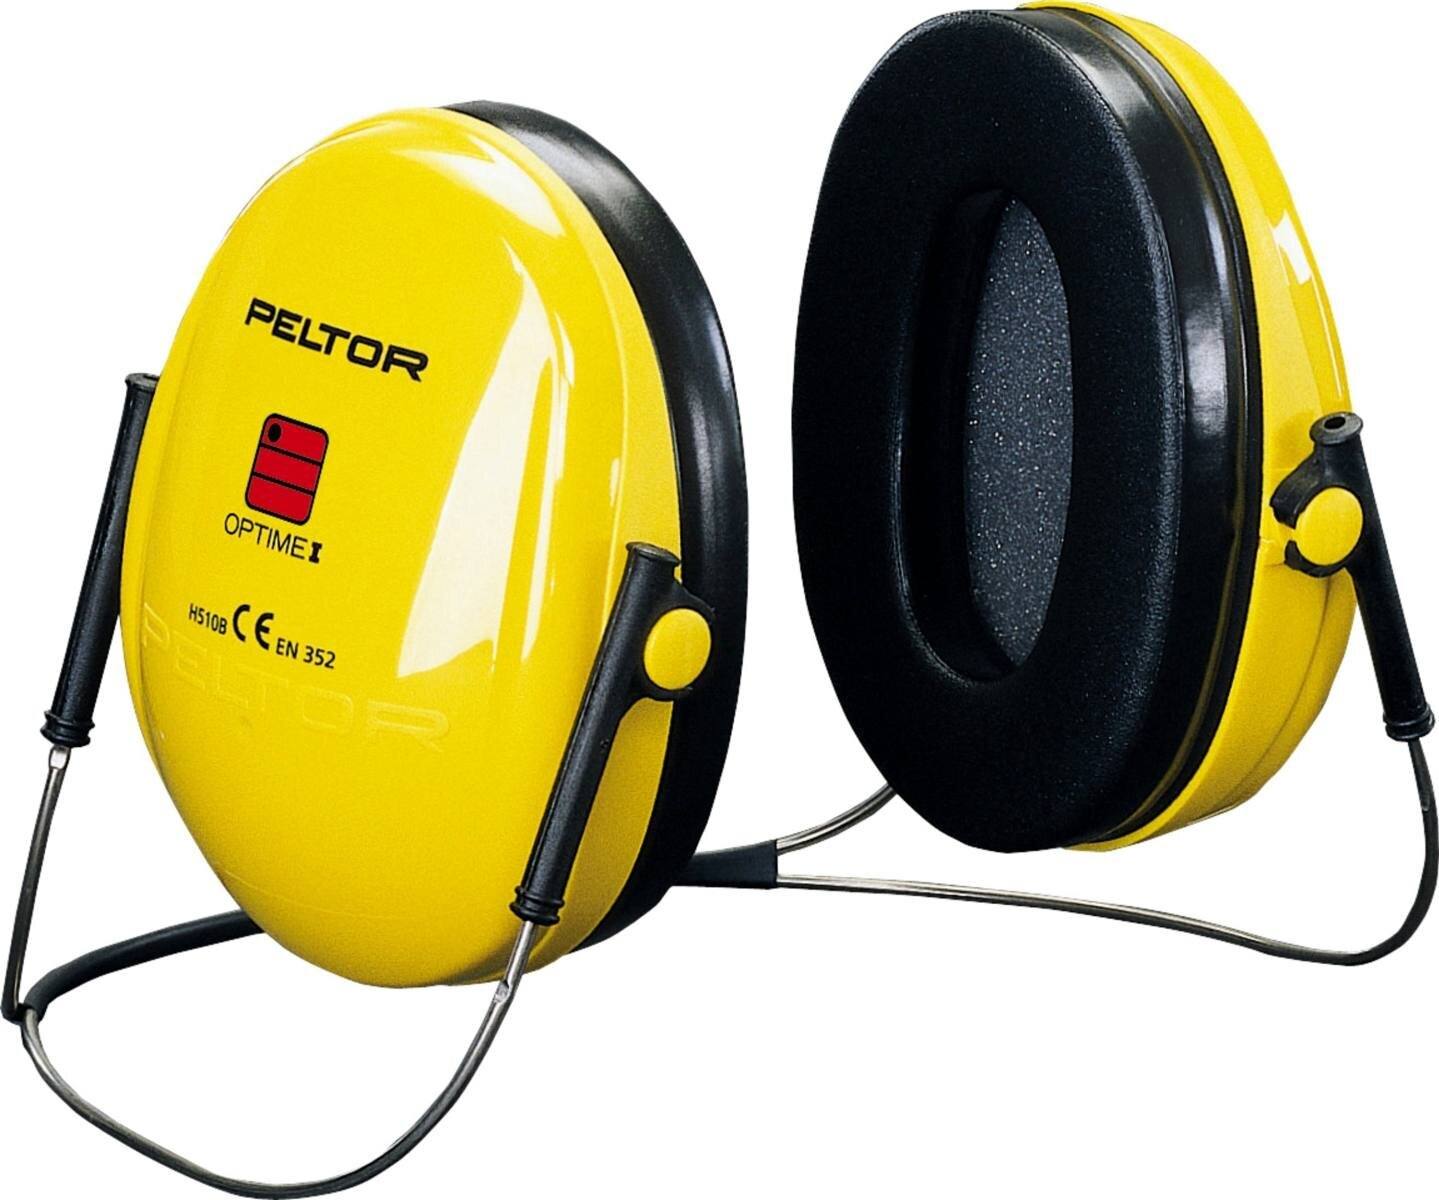 3M PELTOR Optime I ear muffs, neckband, yellow, SNR=26 dB, H510B